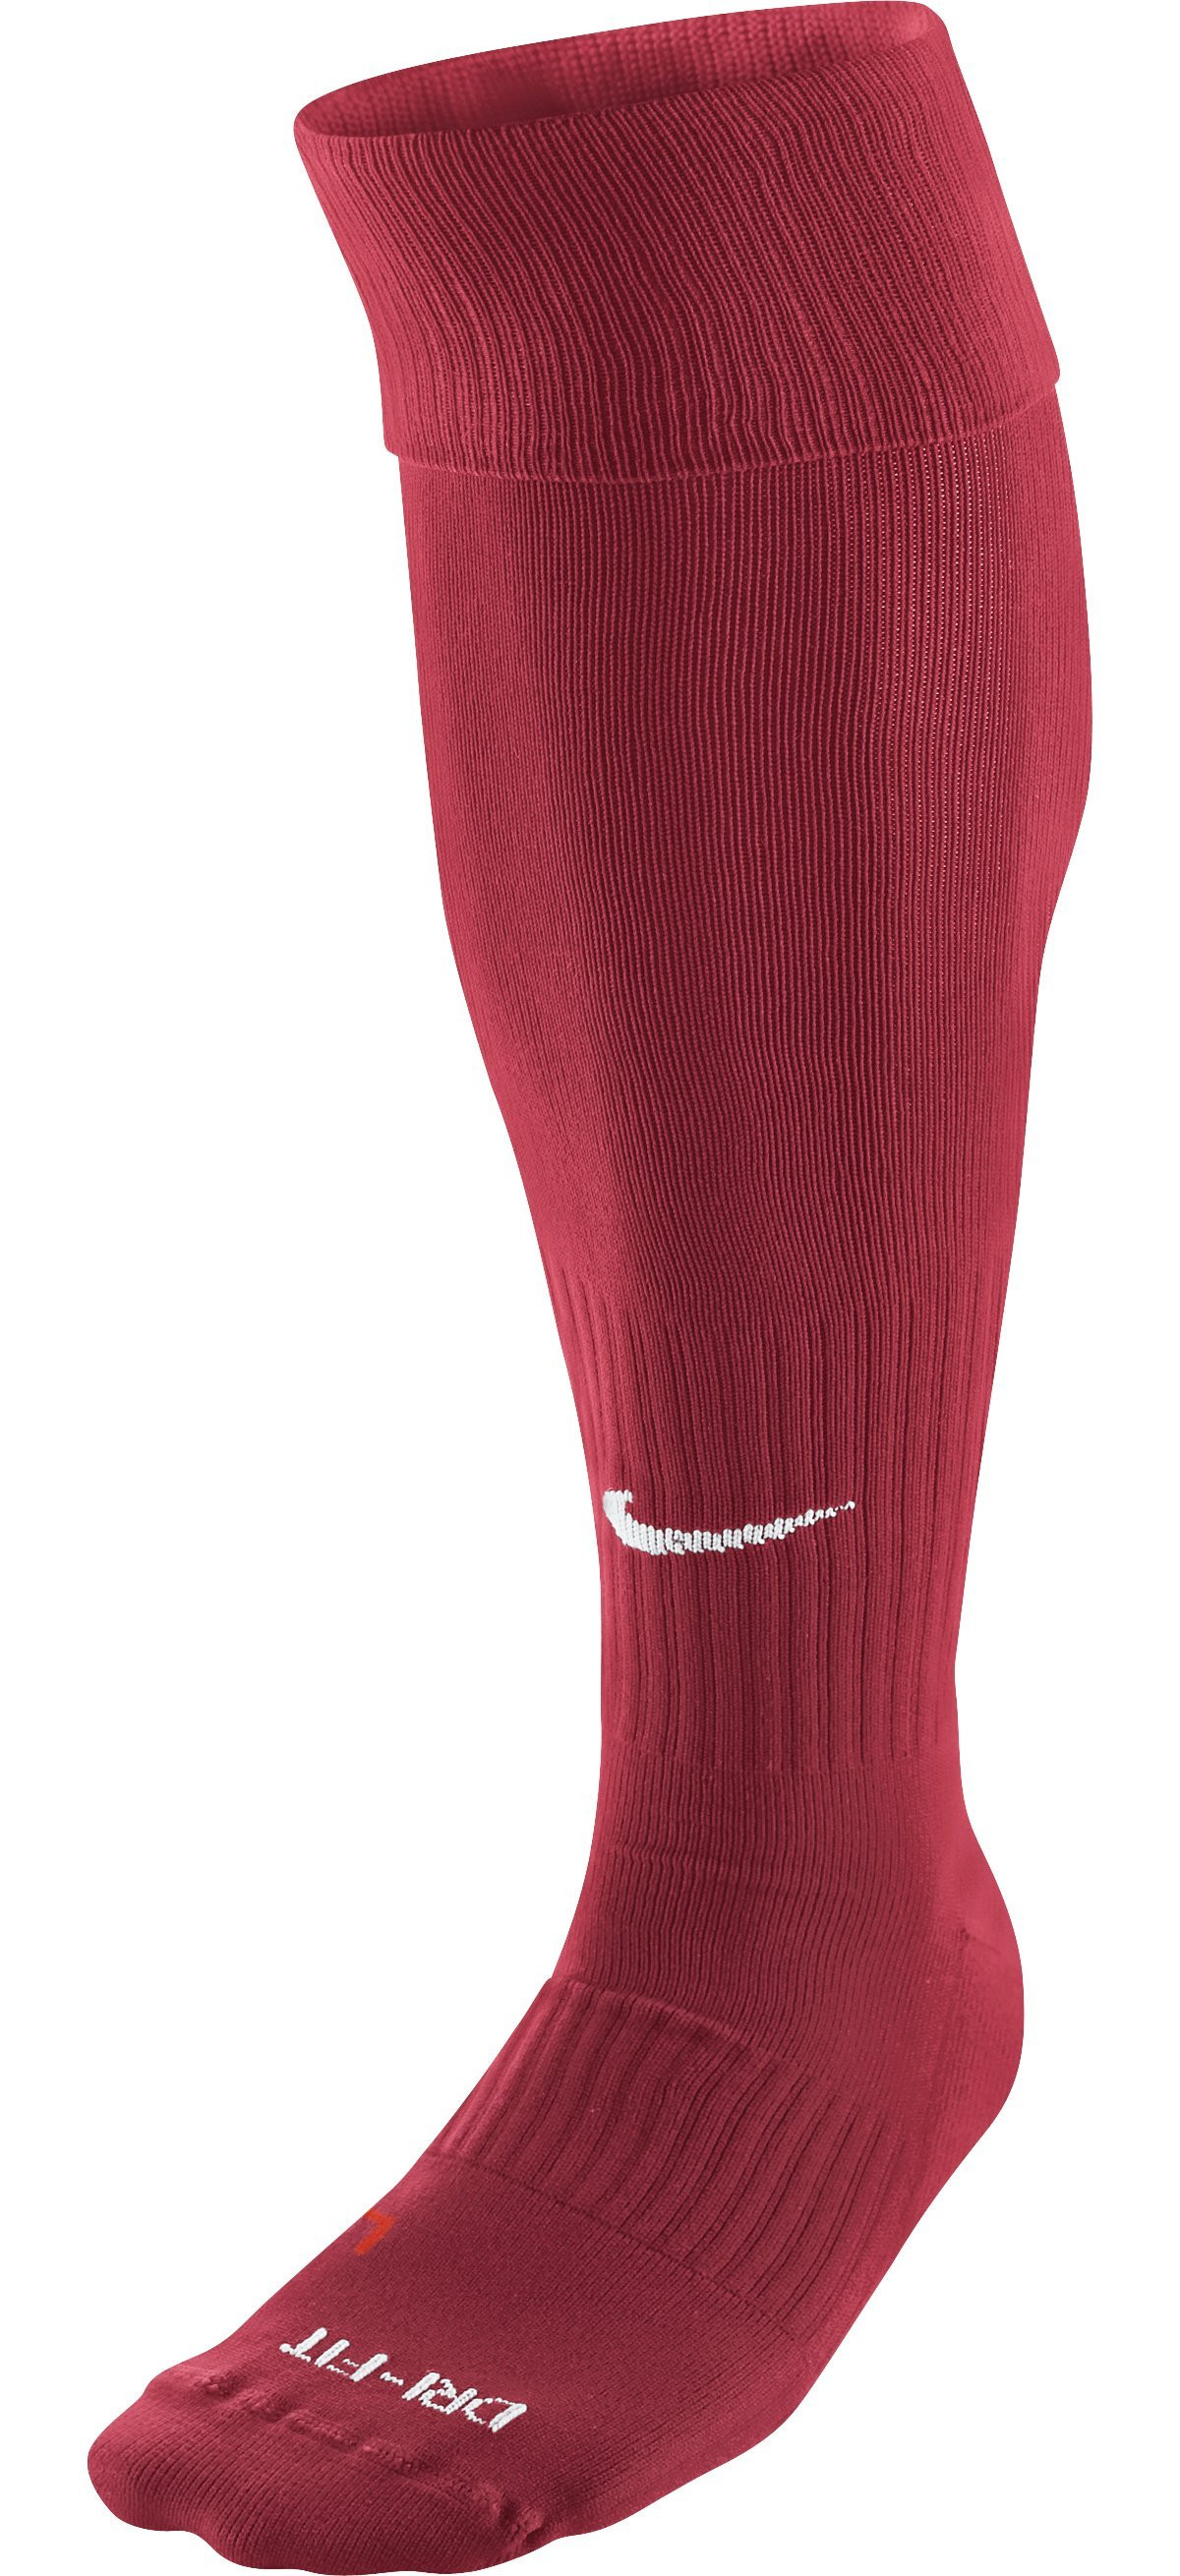 Nike Academy Football Socks - Red - SX4120-601